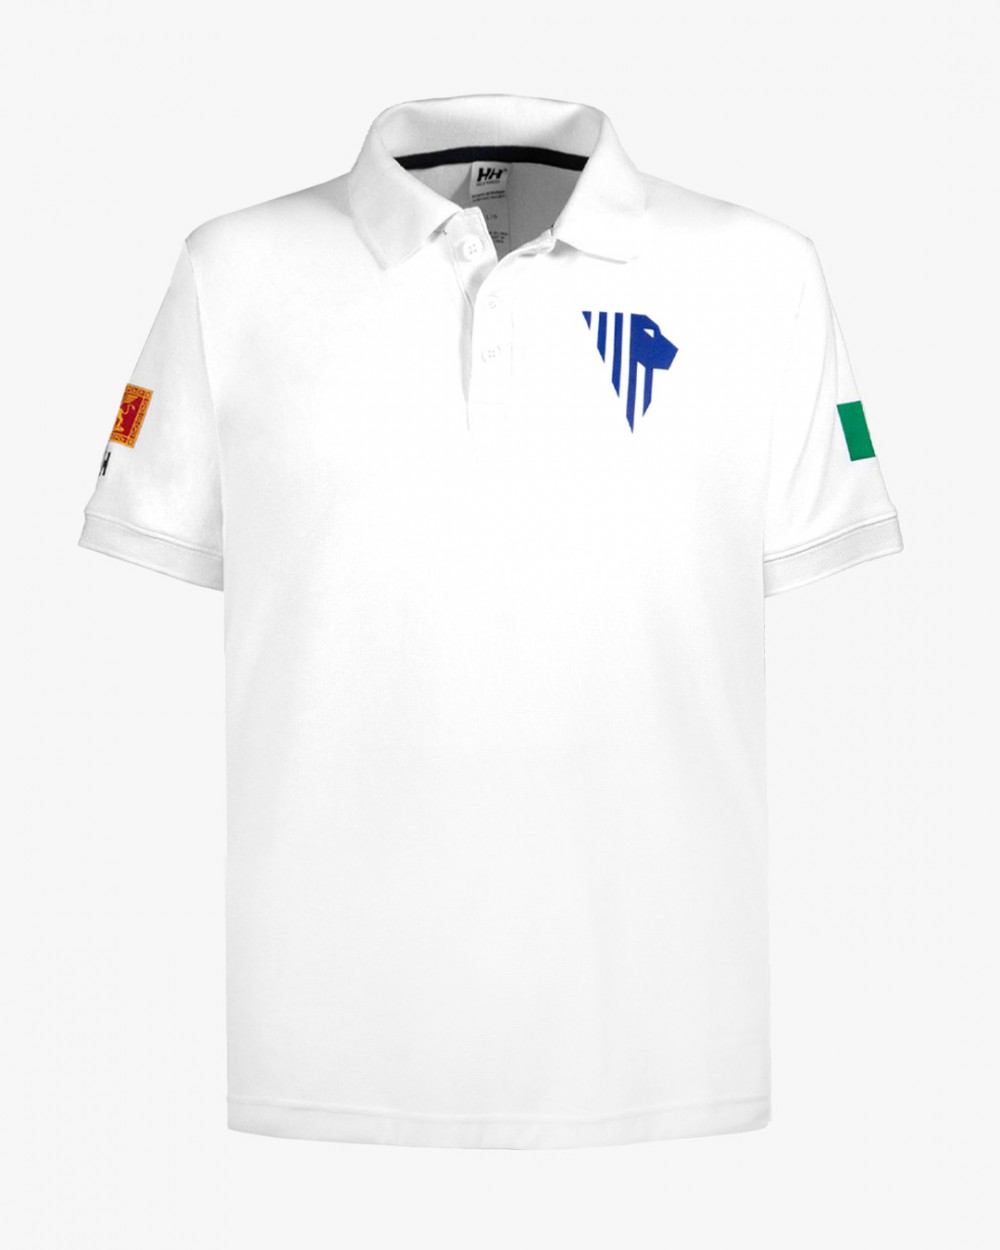 Helly Hansen SHORELINE 2.0 - Camiseta hombre navy - Private Sport Shop